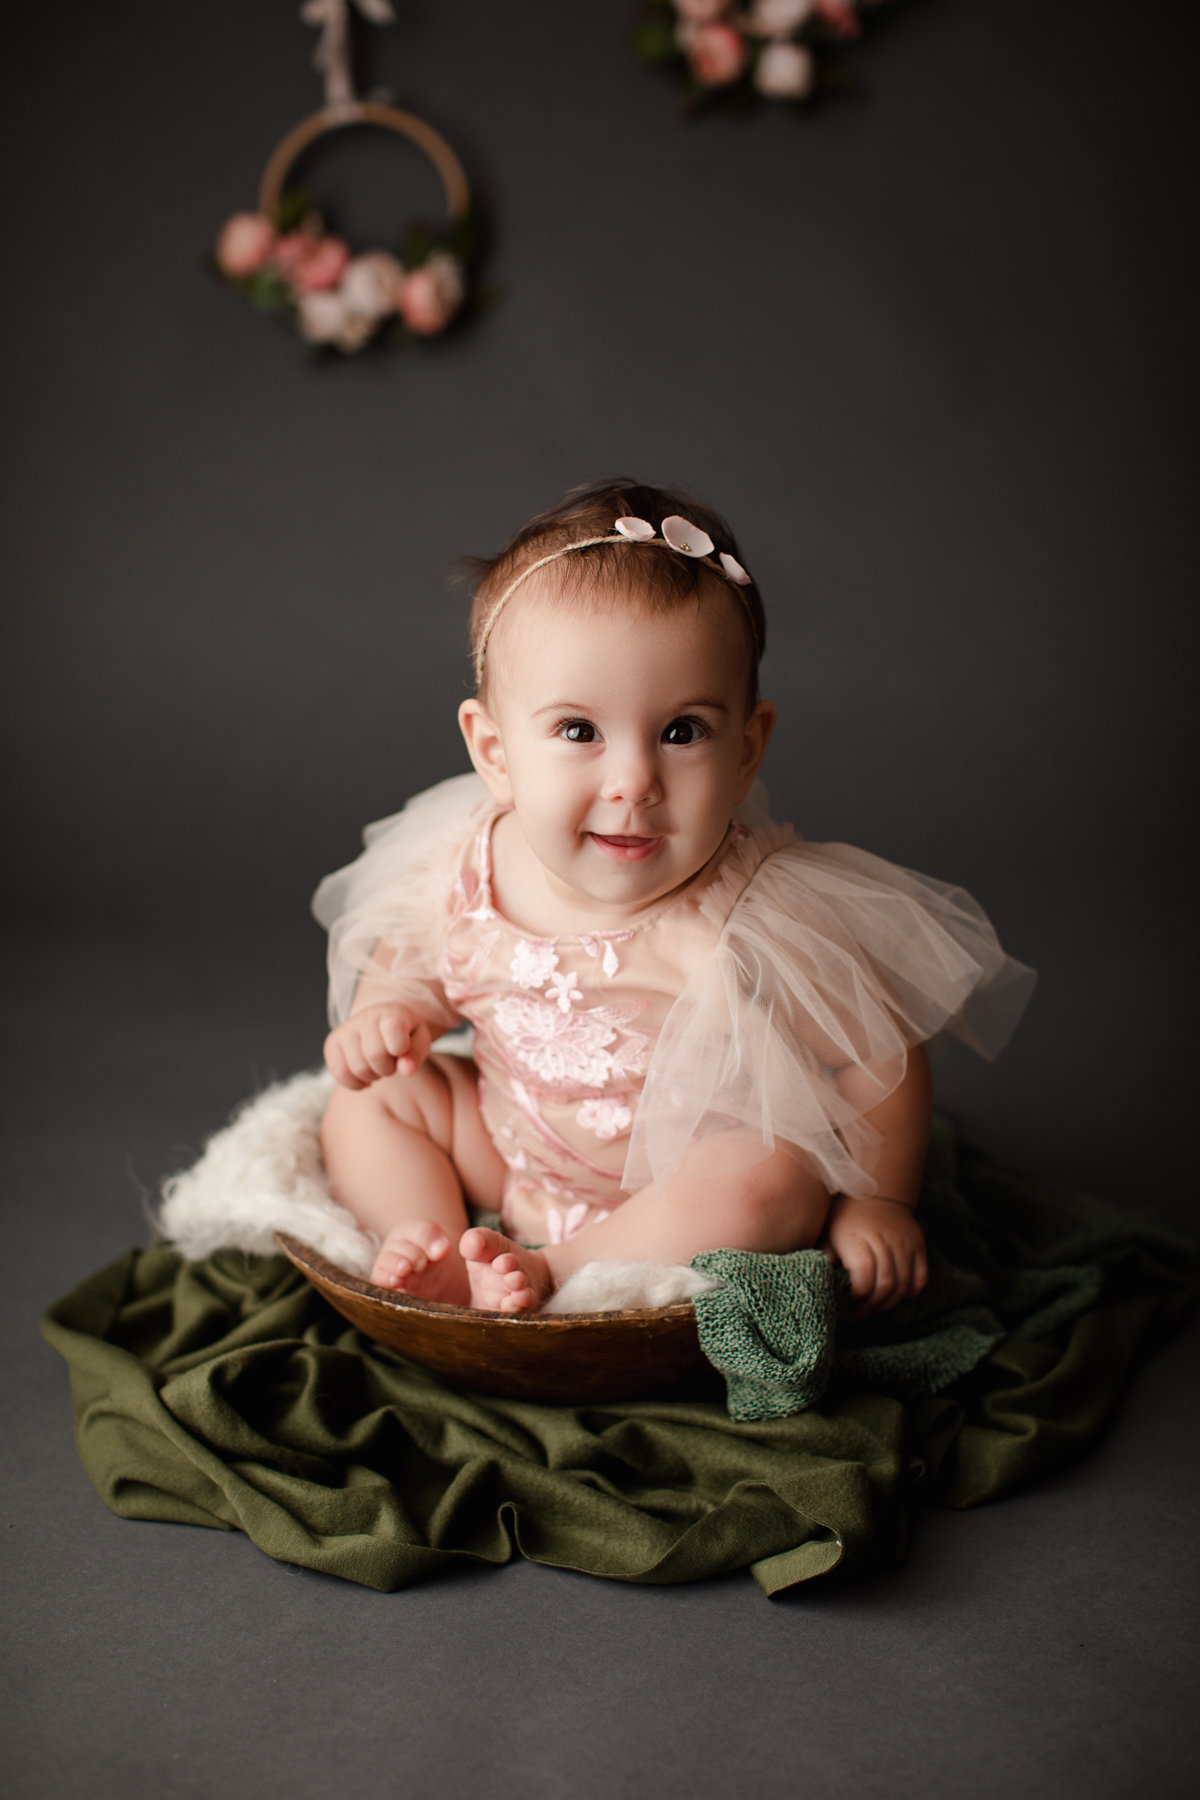 thousand oaks baby photographer, ventura county baby photography, baby portraits